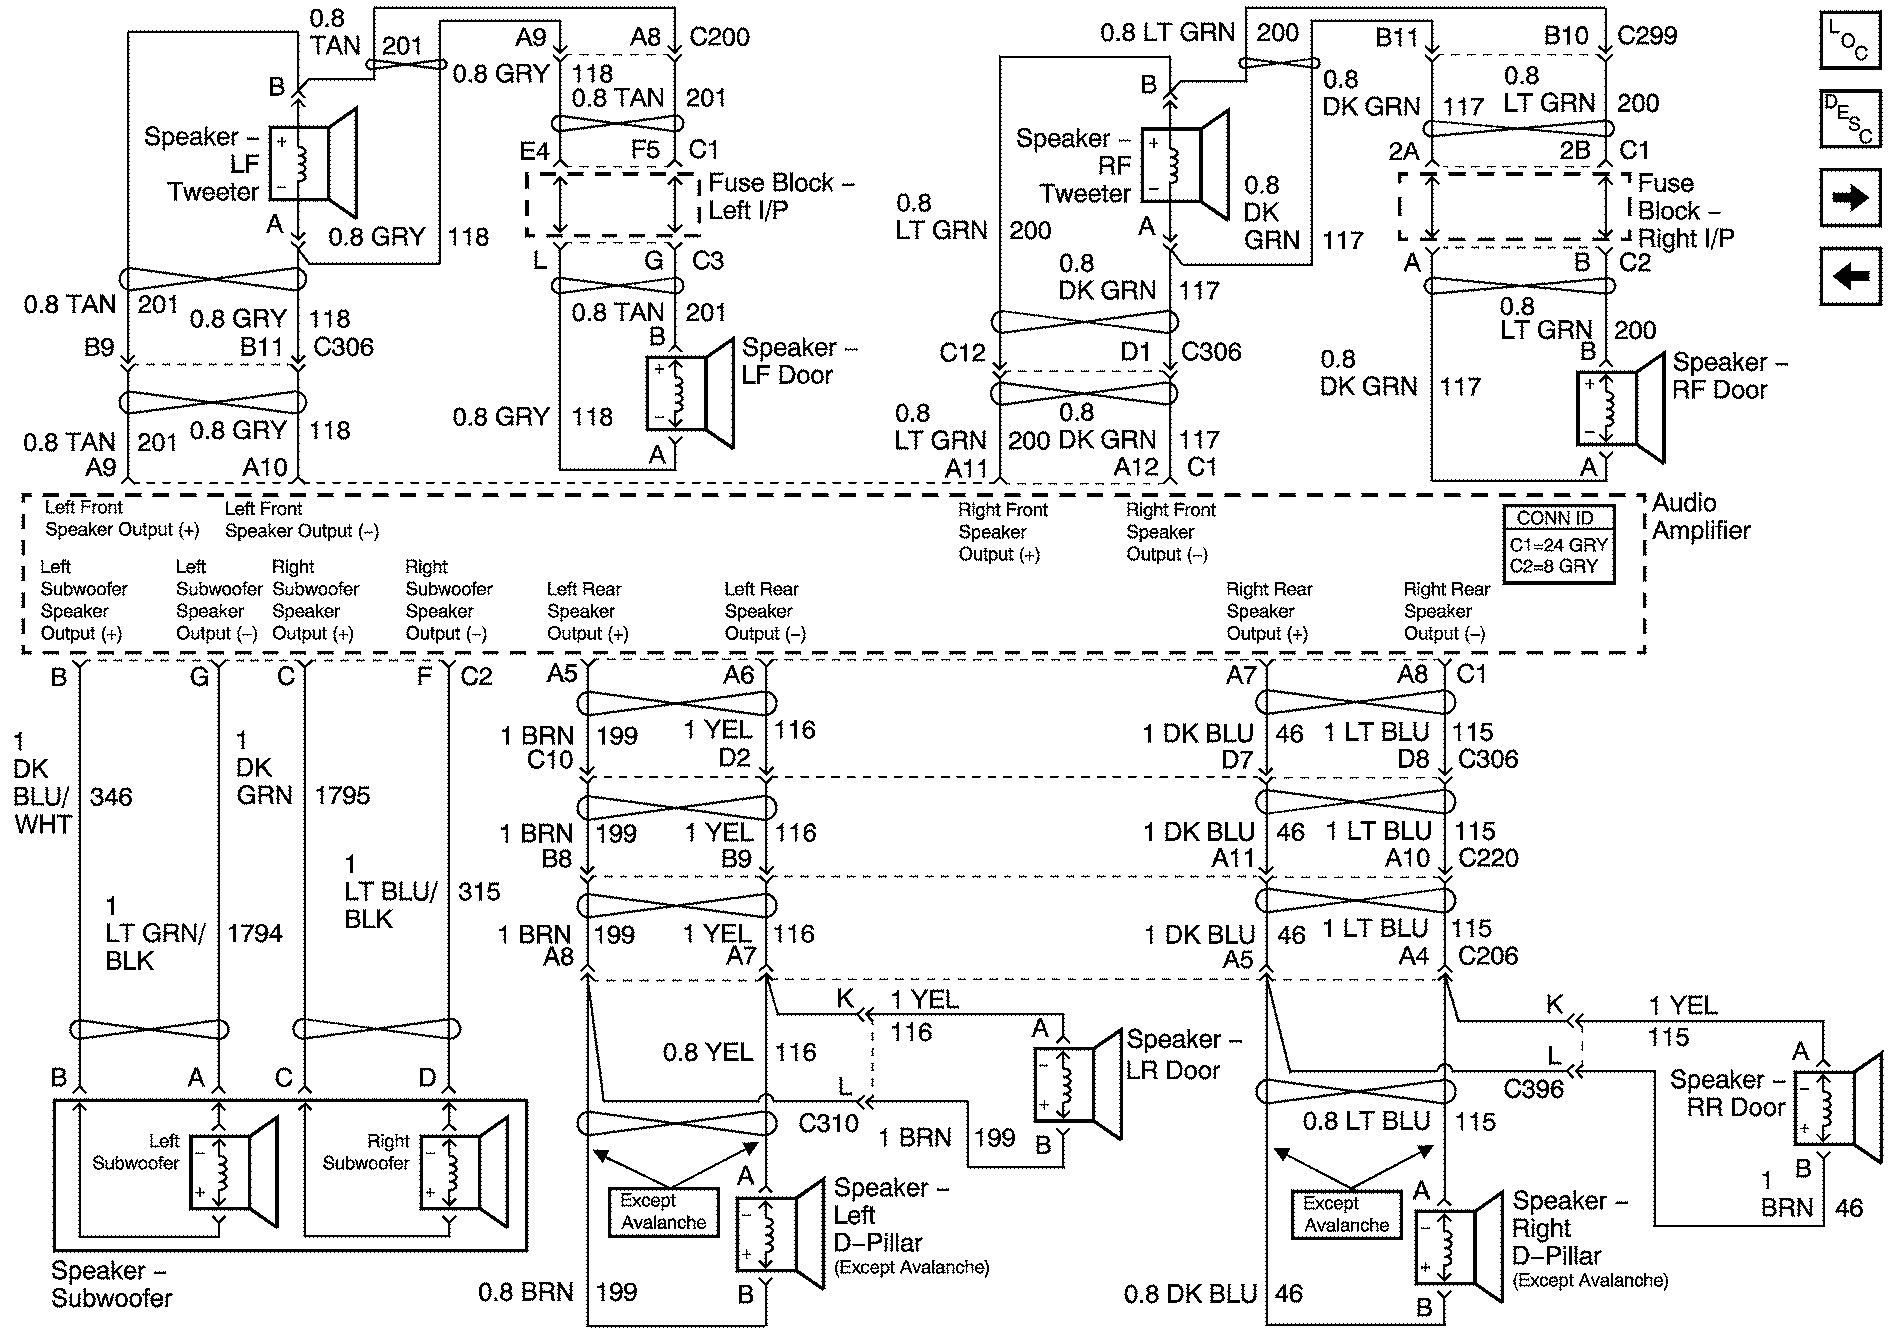 2006 Chevy Avalanche Radio Wiring Diagram Bos Radio Wiring